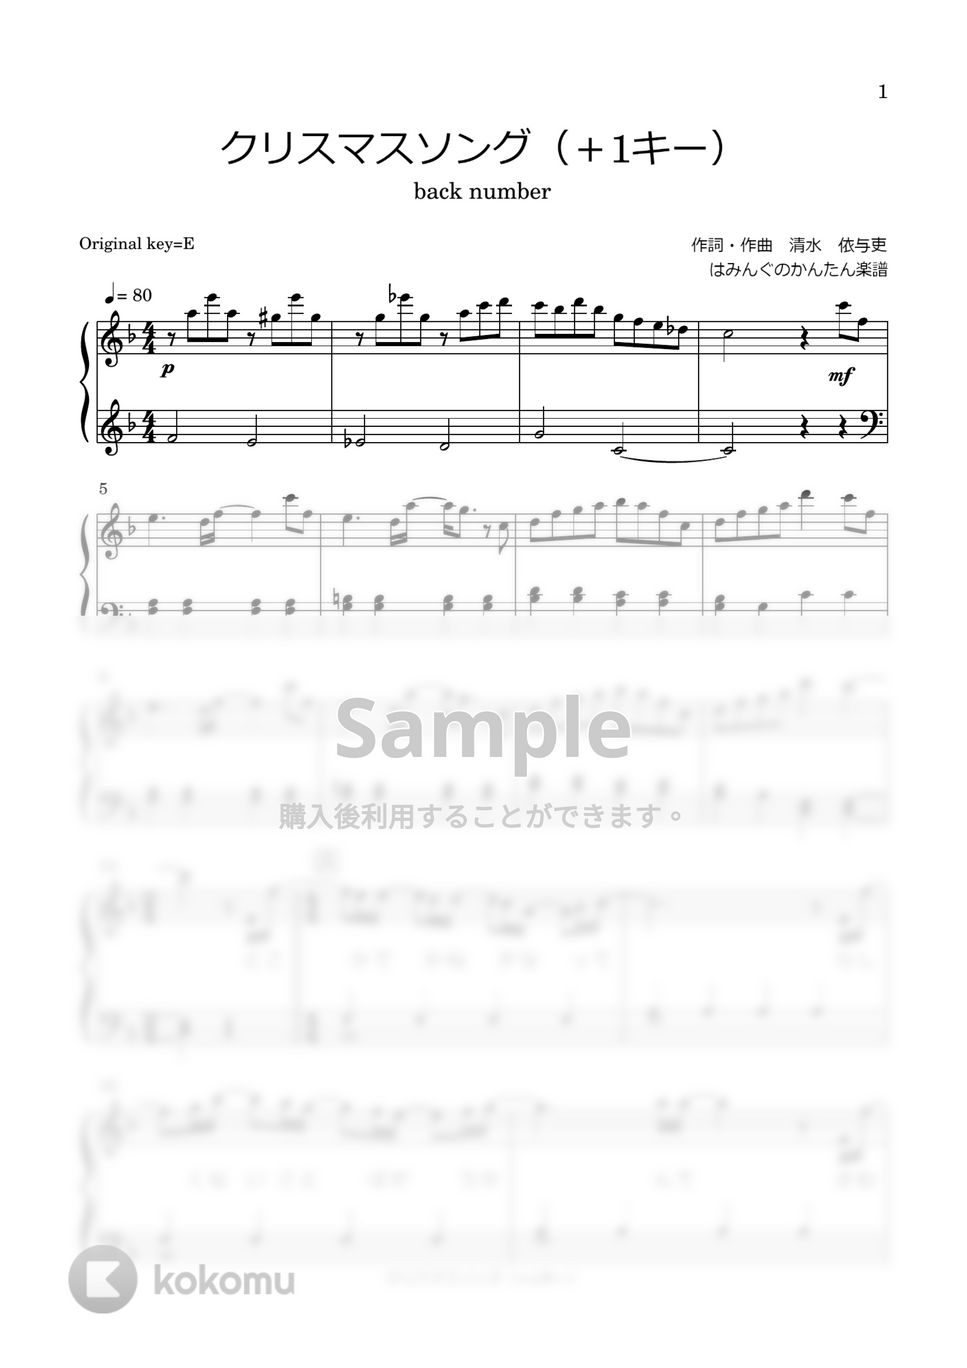 back number - クリスマスソング (♭１つで弾ける/歌詞付き) by はみんぐのかんたん楽譜